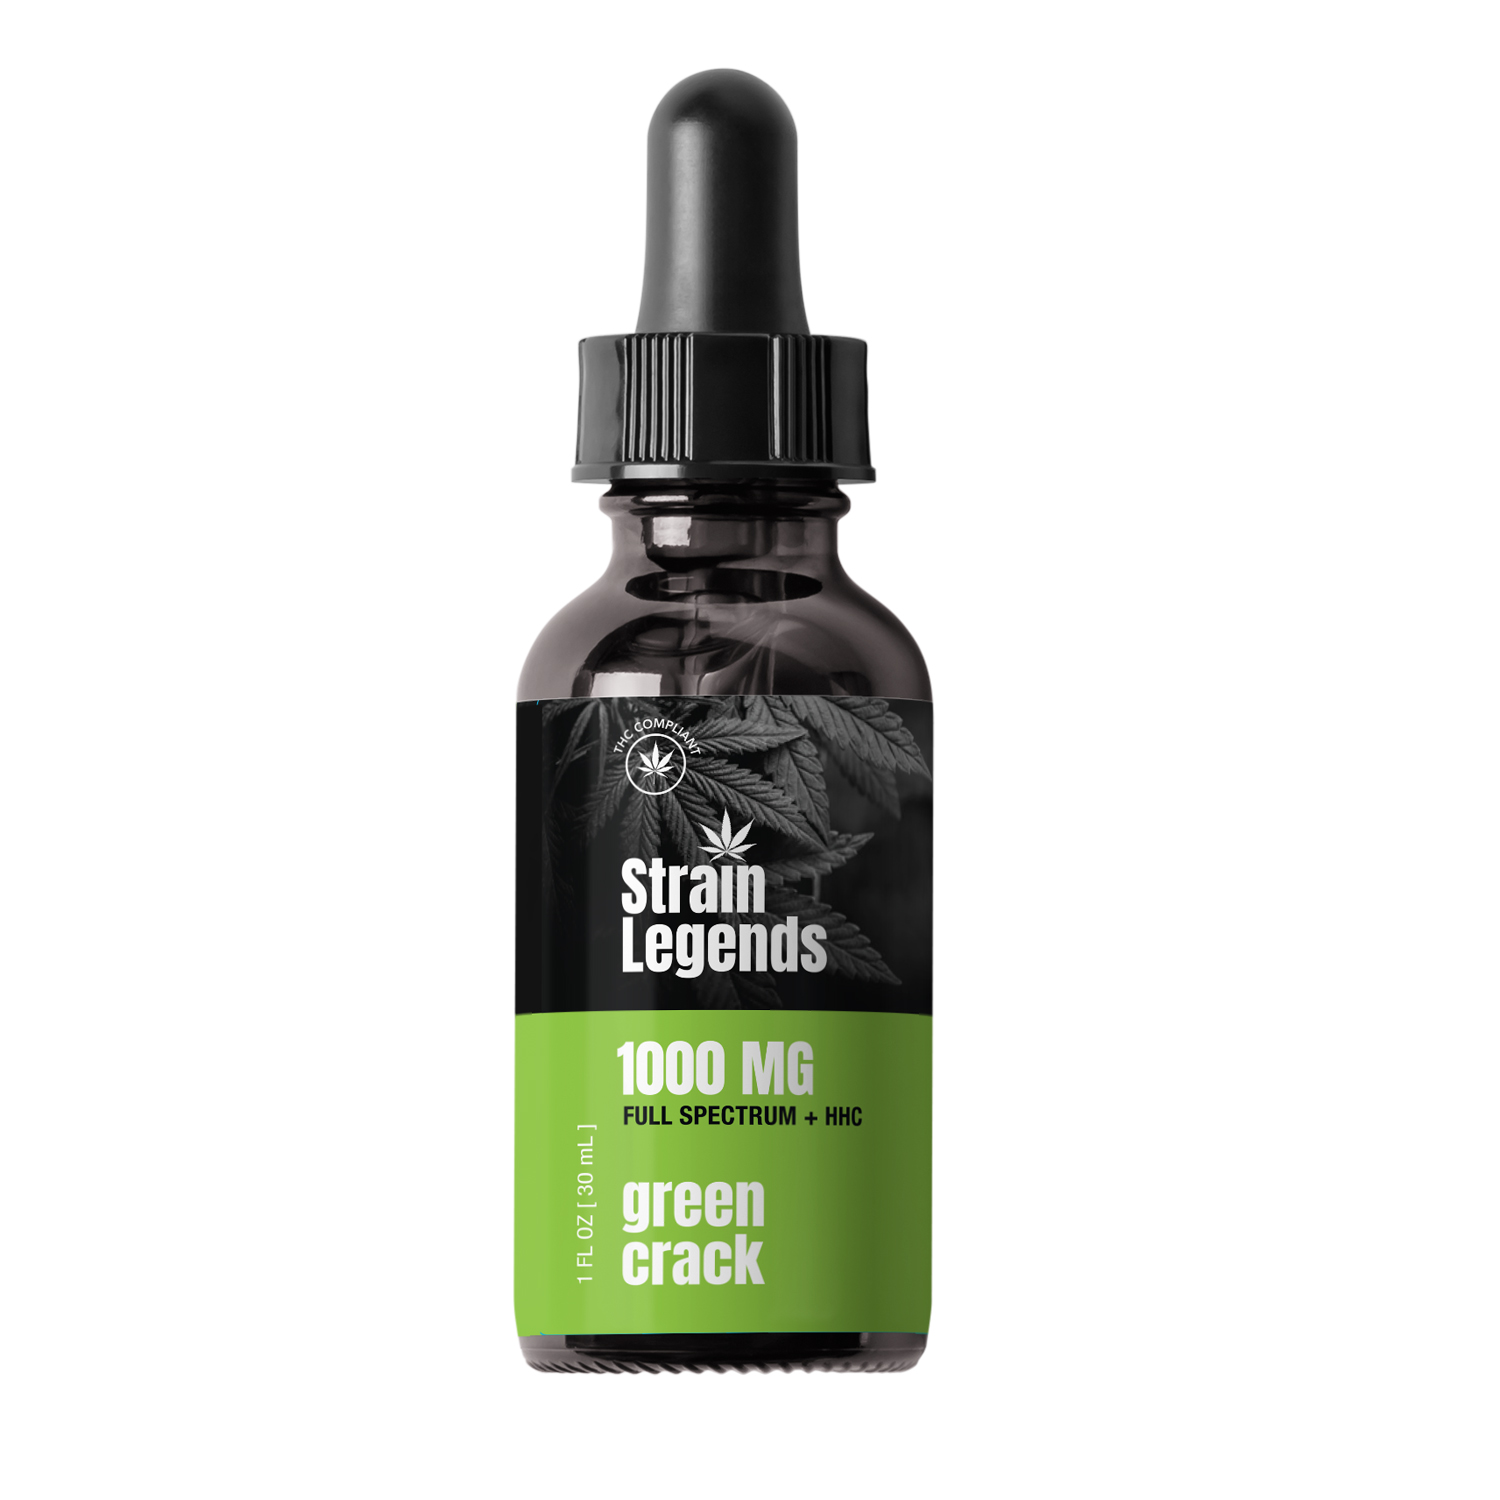 Strain Legends 1000 mg Full Spectrum + HHC Tincture, Green Crack